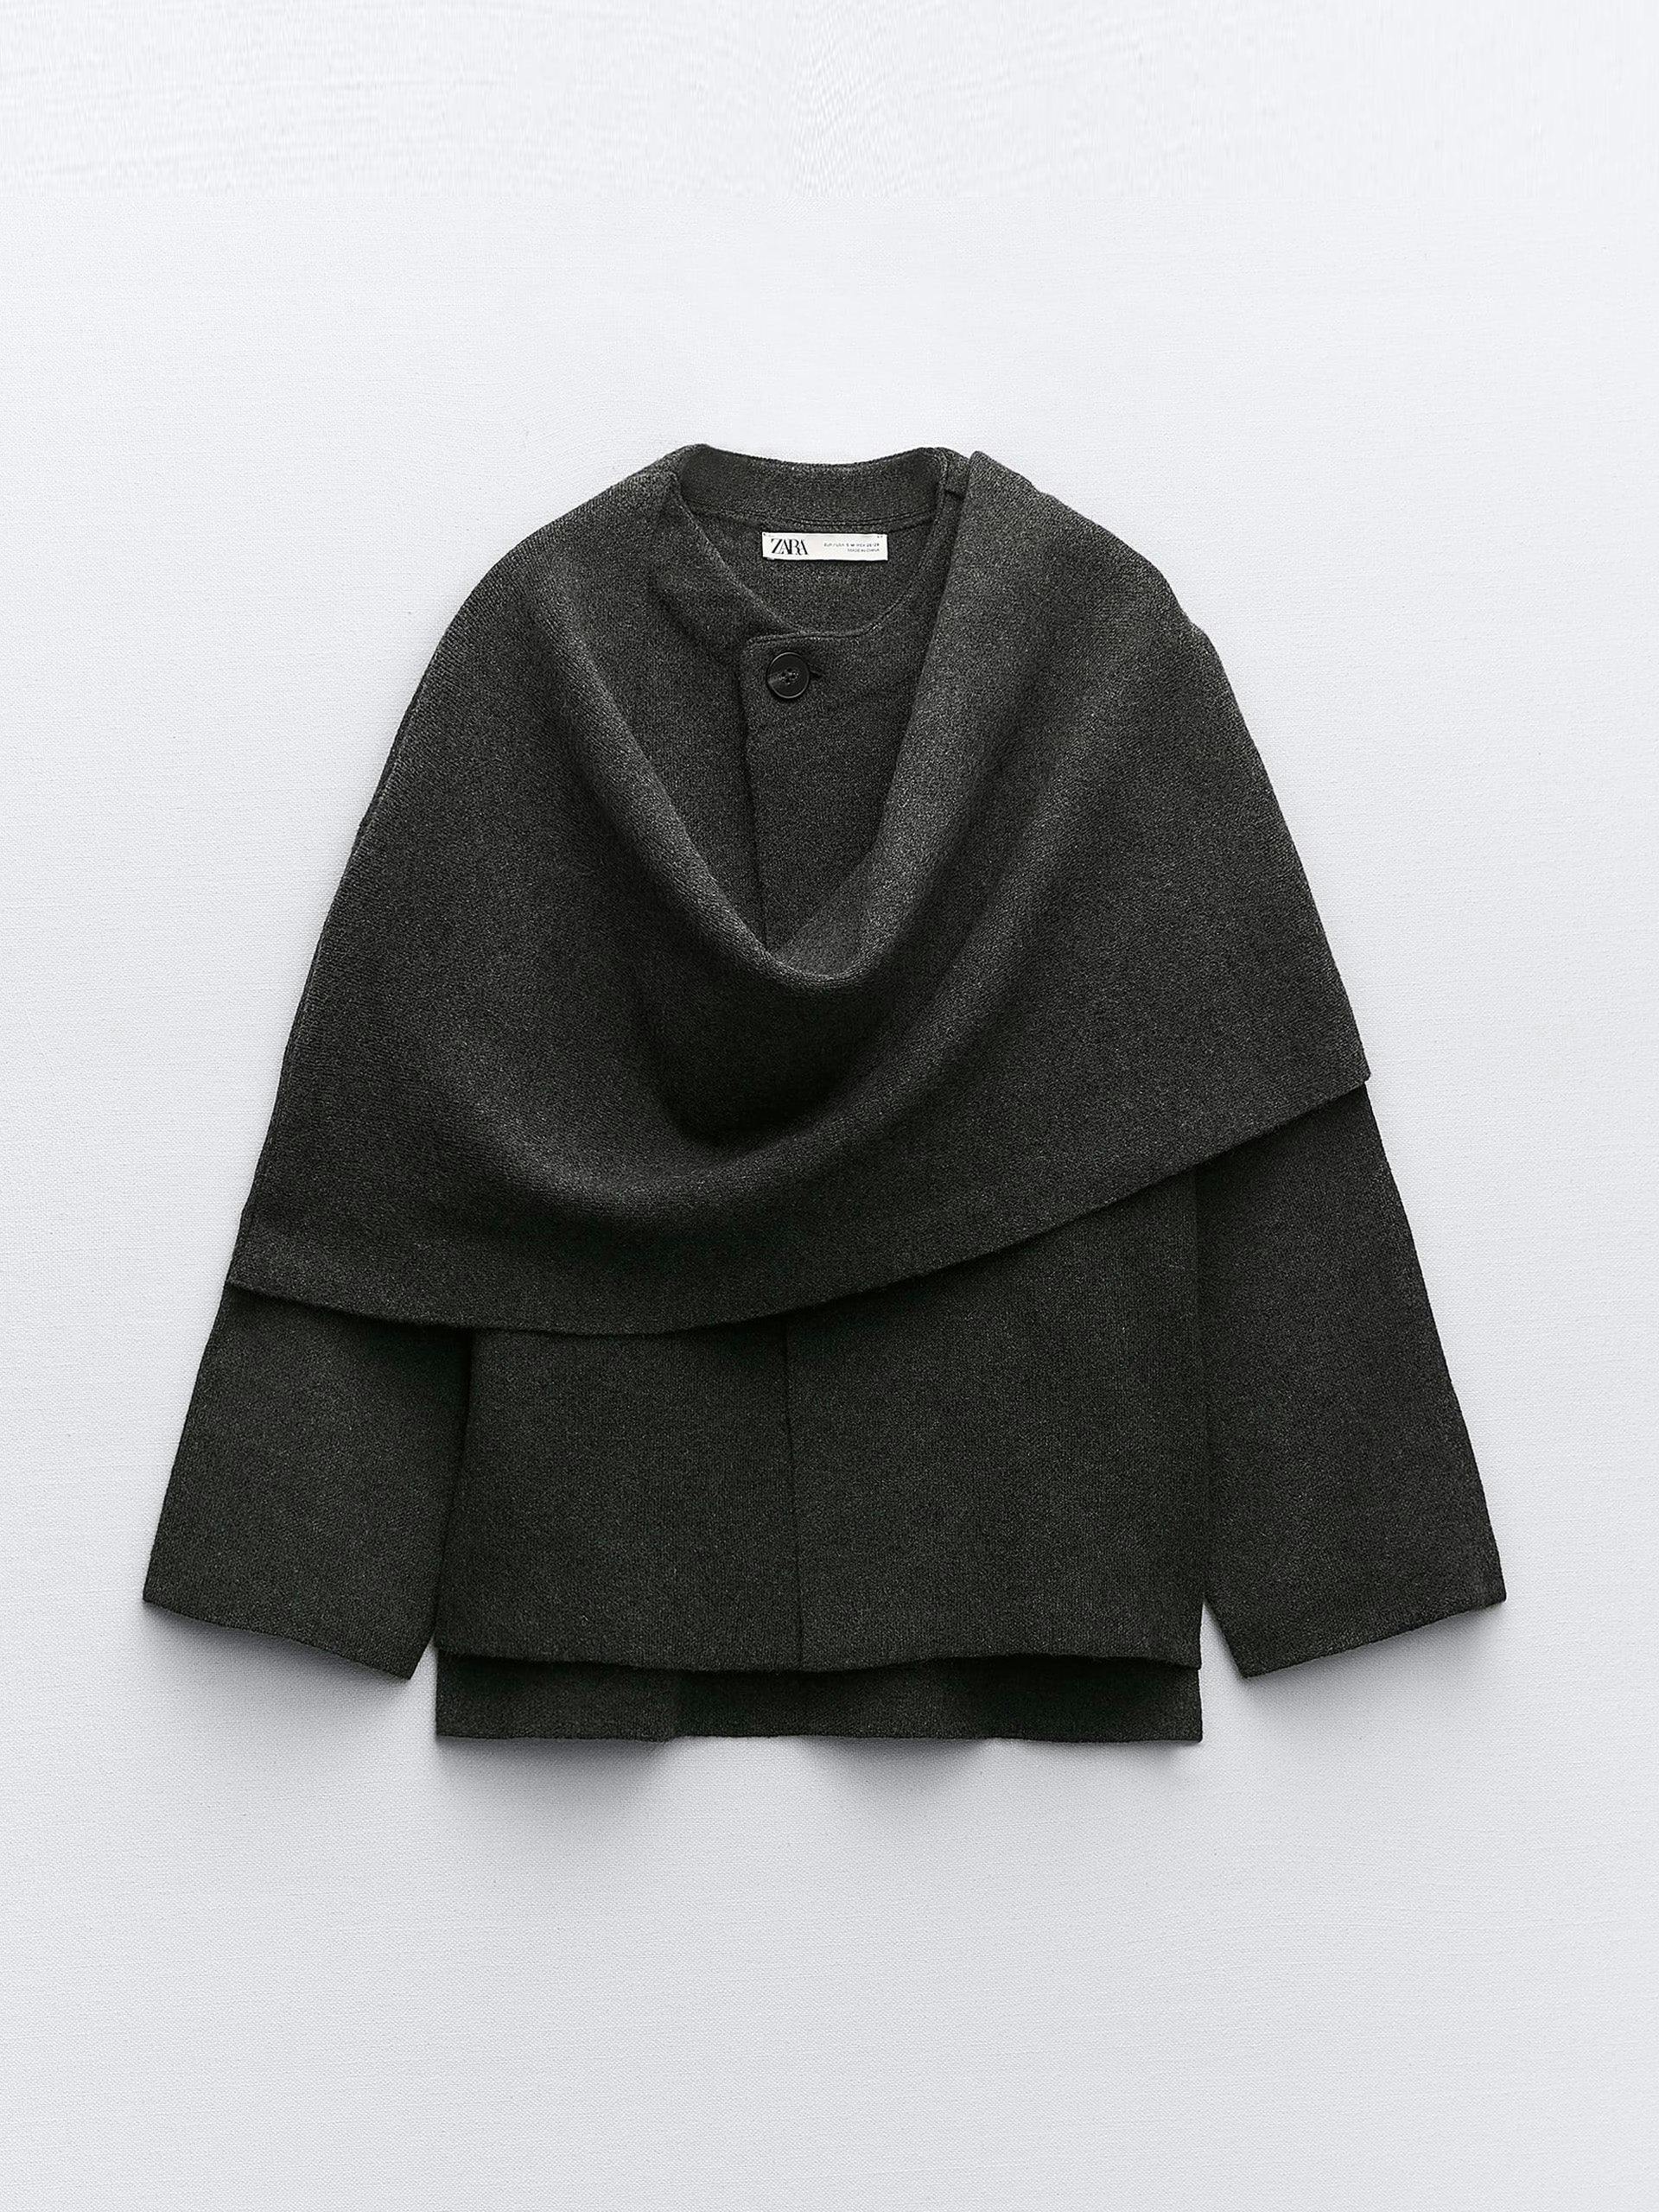 Short knit grey coat with asymmetric scarf